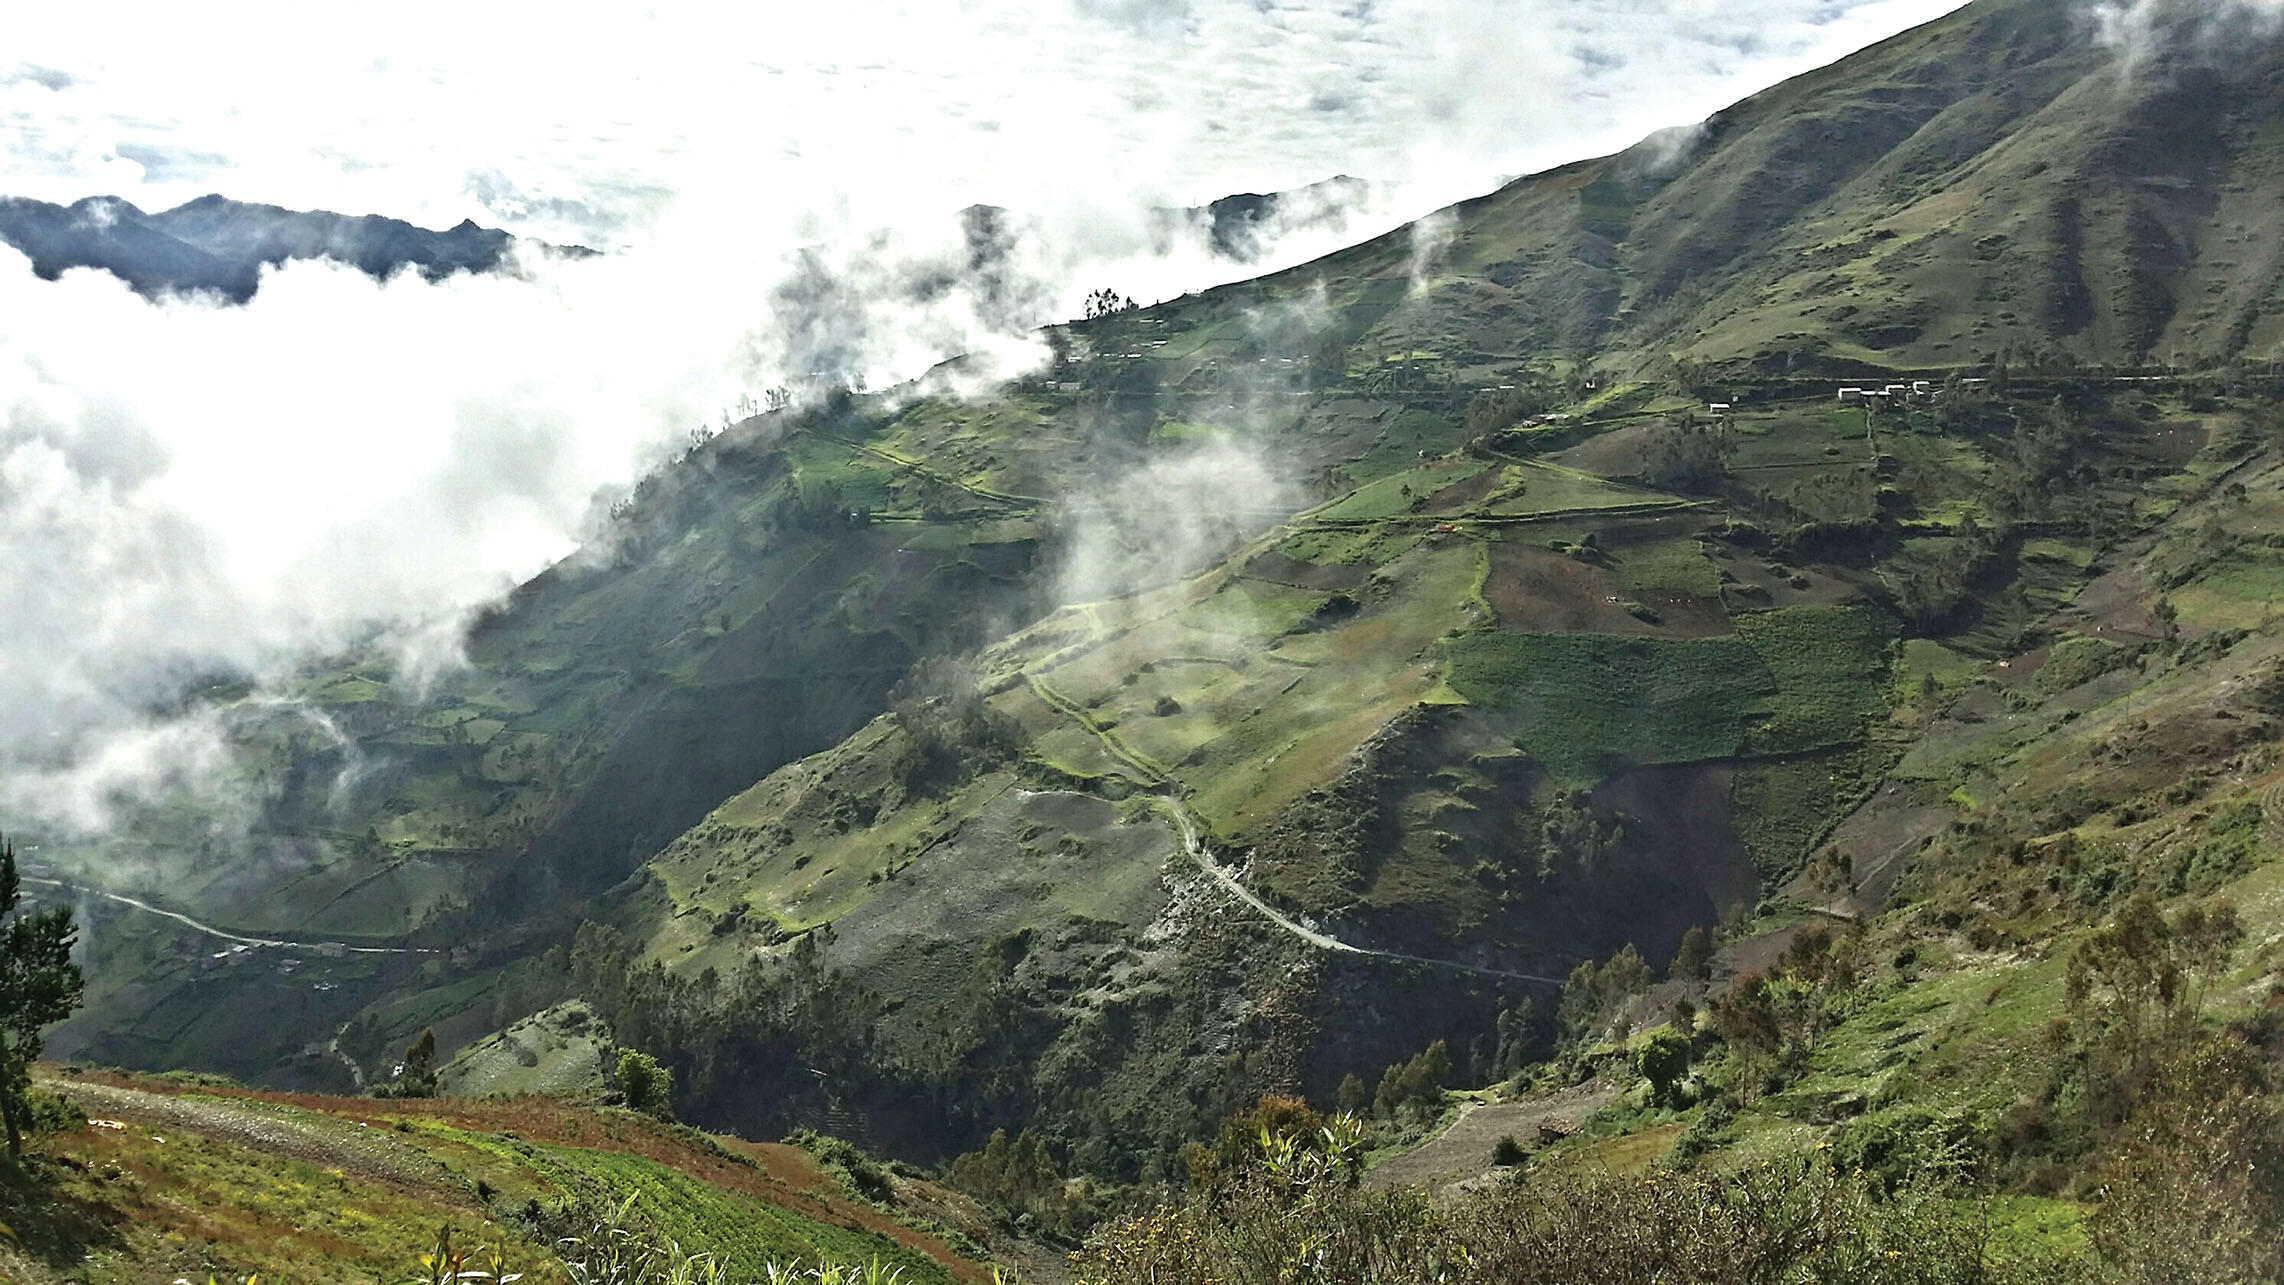 Steep hillsides and mists dot the mountainous landscape of Peru. (Photo by Vladimir Prieto.)